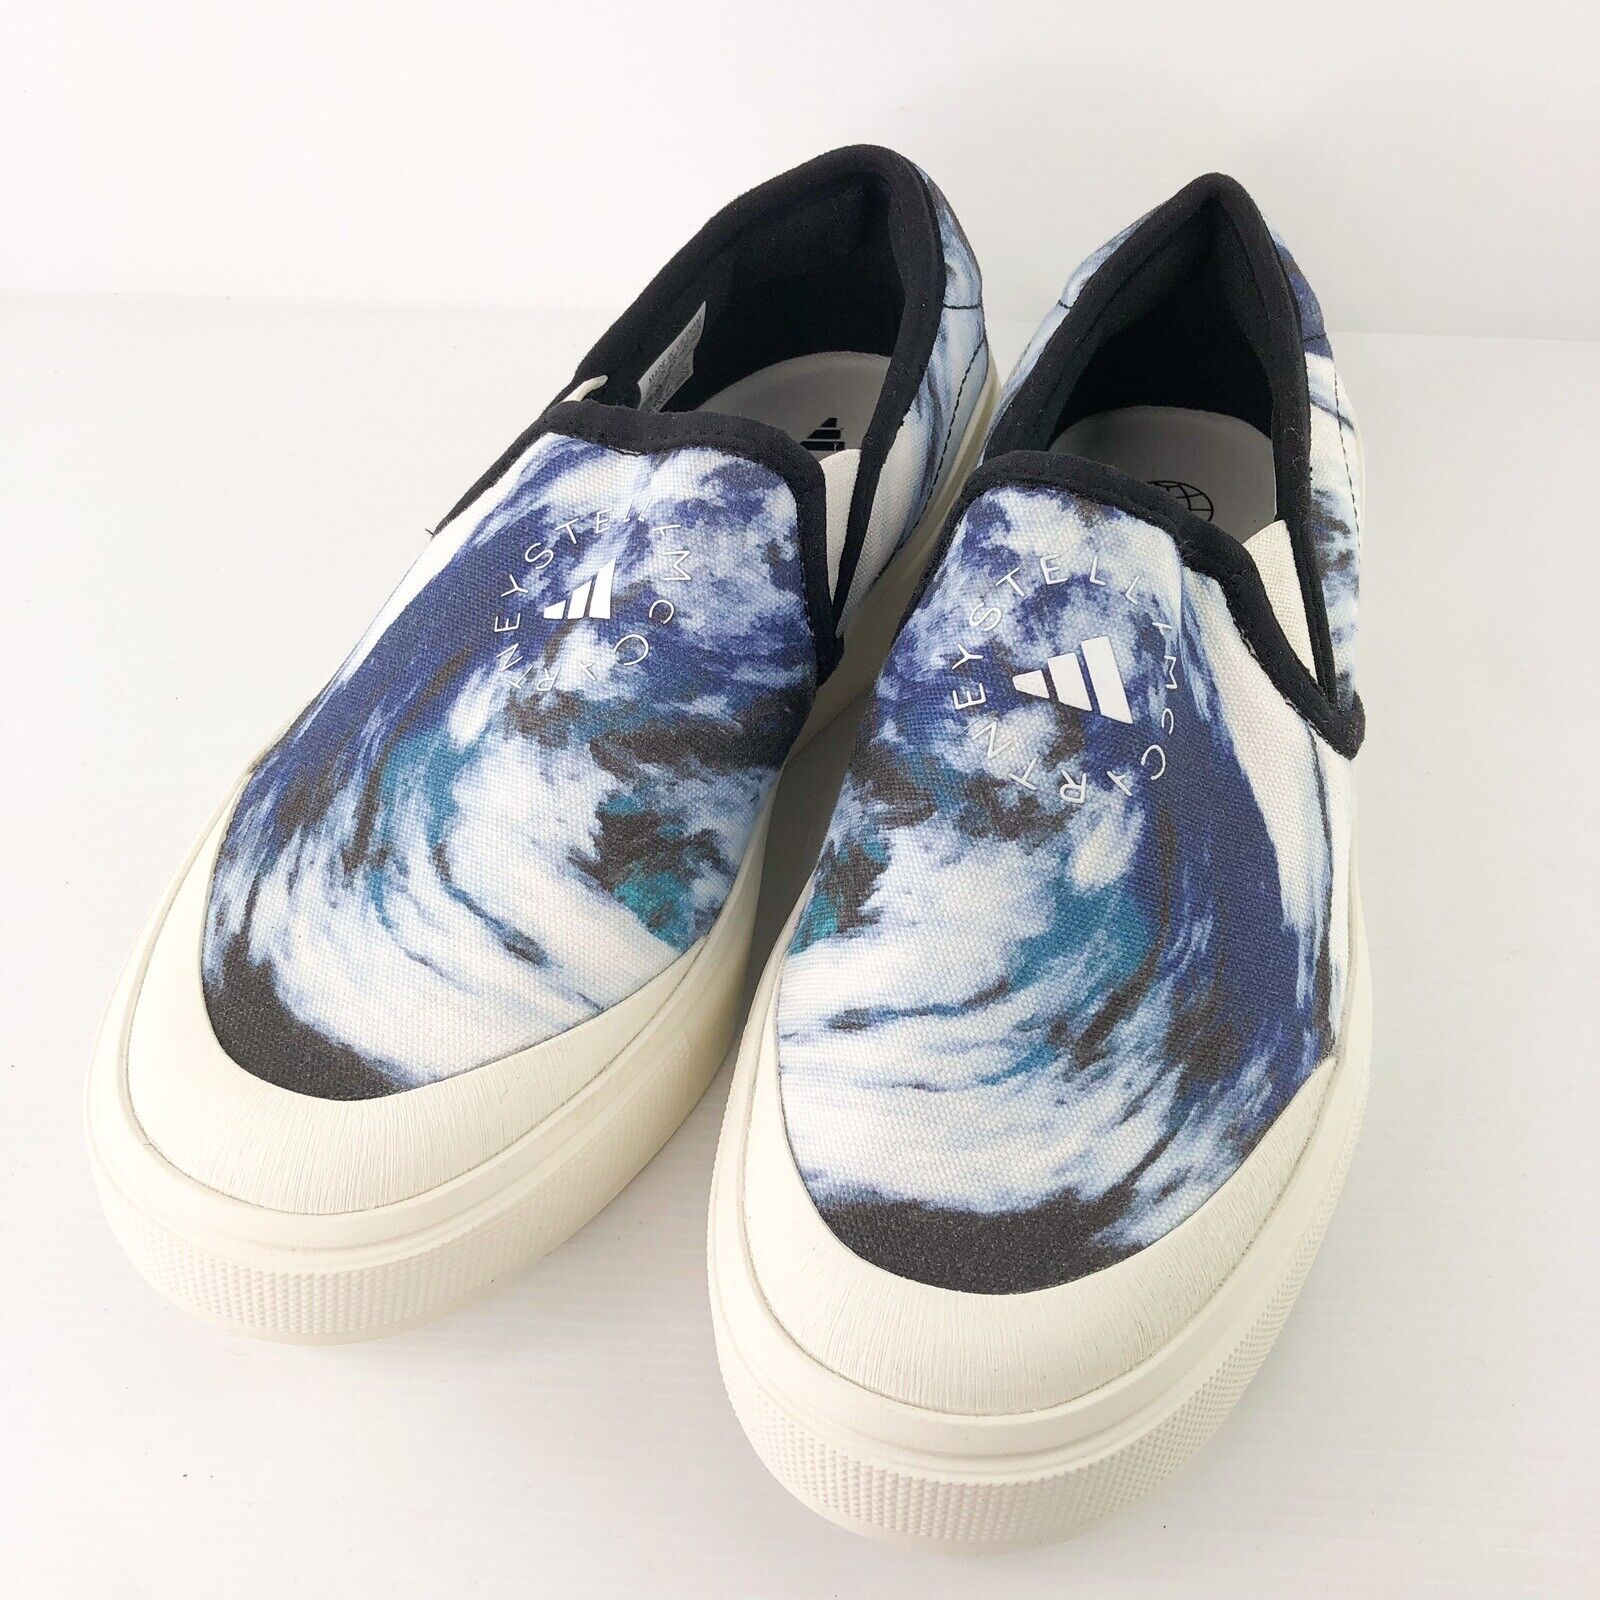 Adidas By Stella McCartney Women’s Court Slip-On Shoes Blue/White US 7 UK 6.5